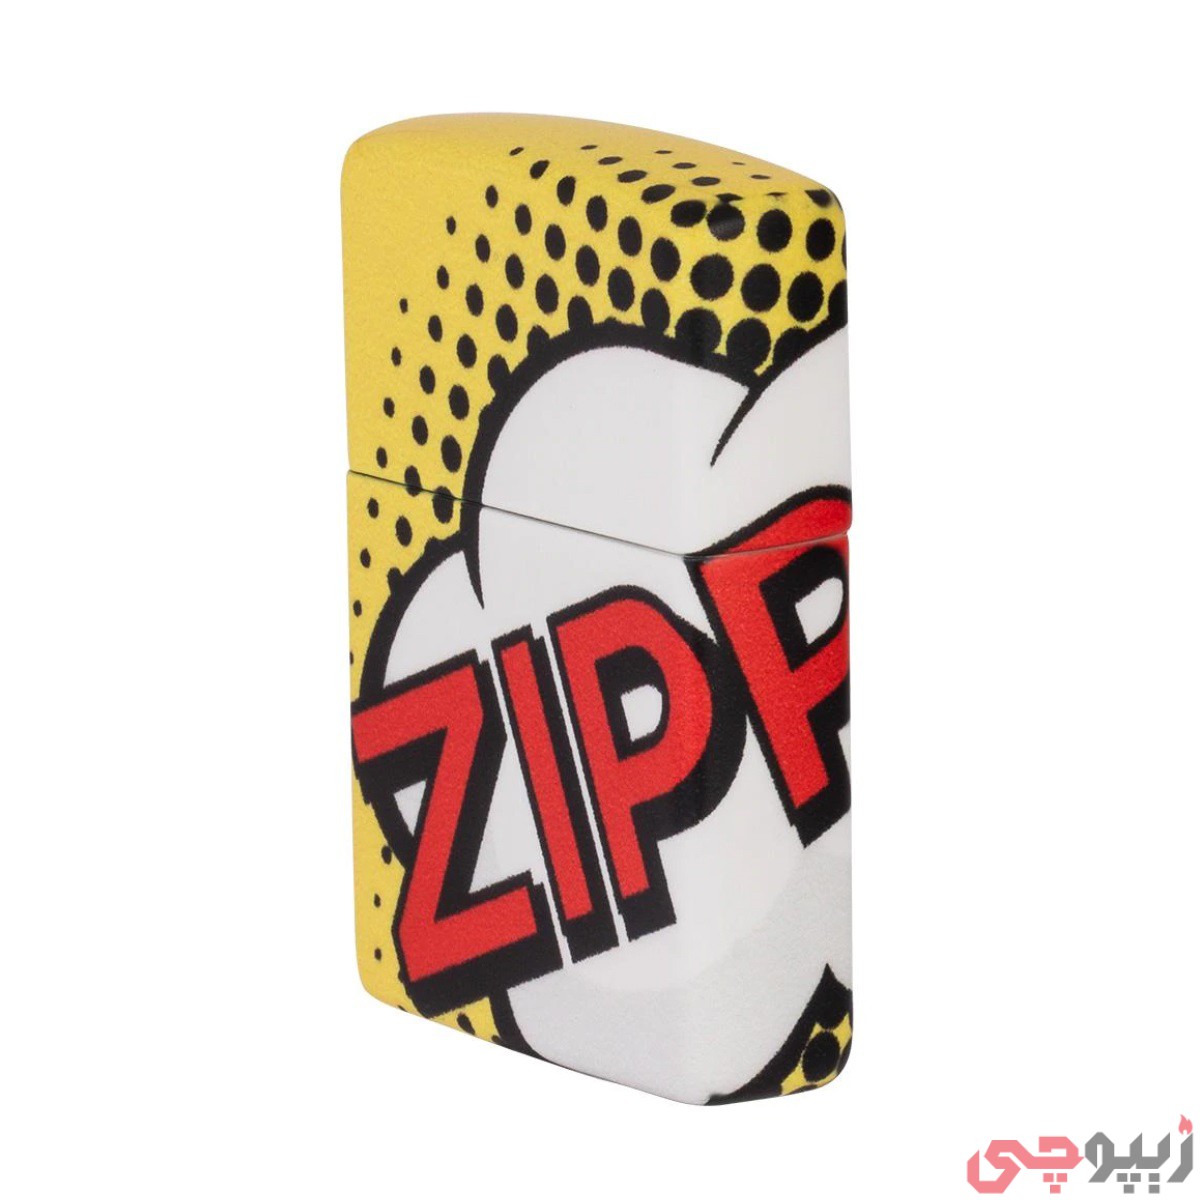 فندک زیپو اصل کد 49533 - Original Zippo Lighter